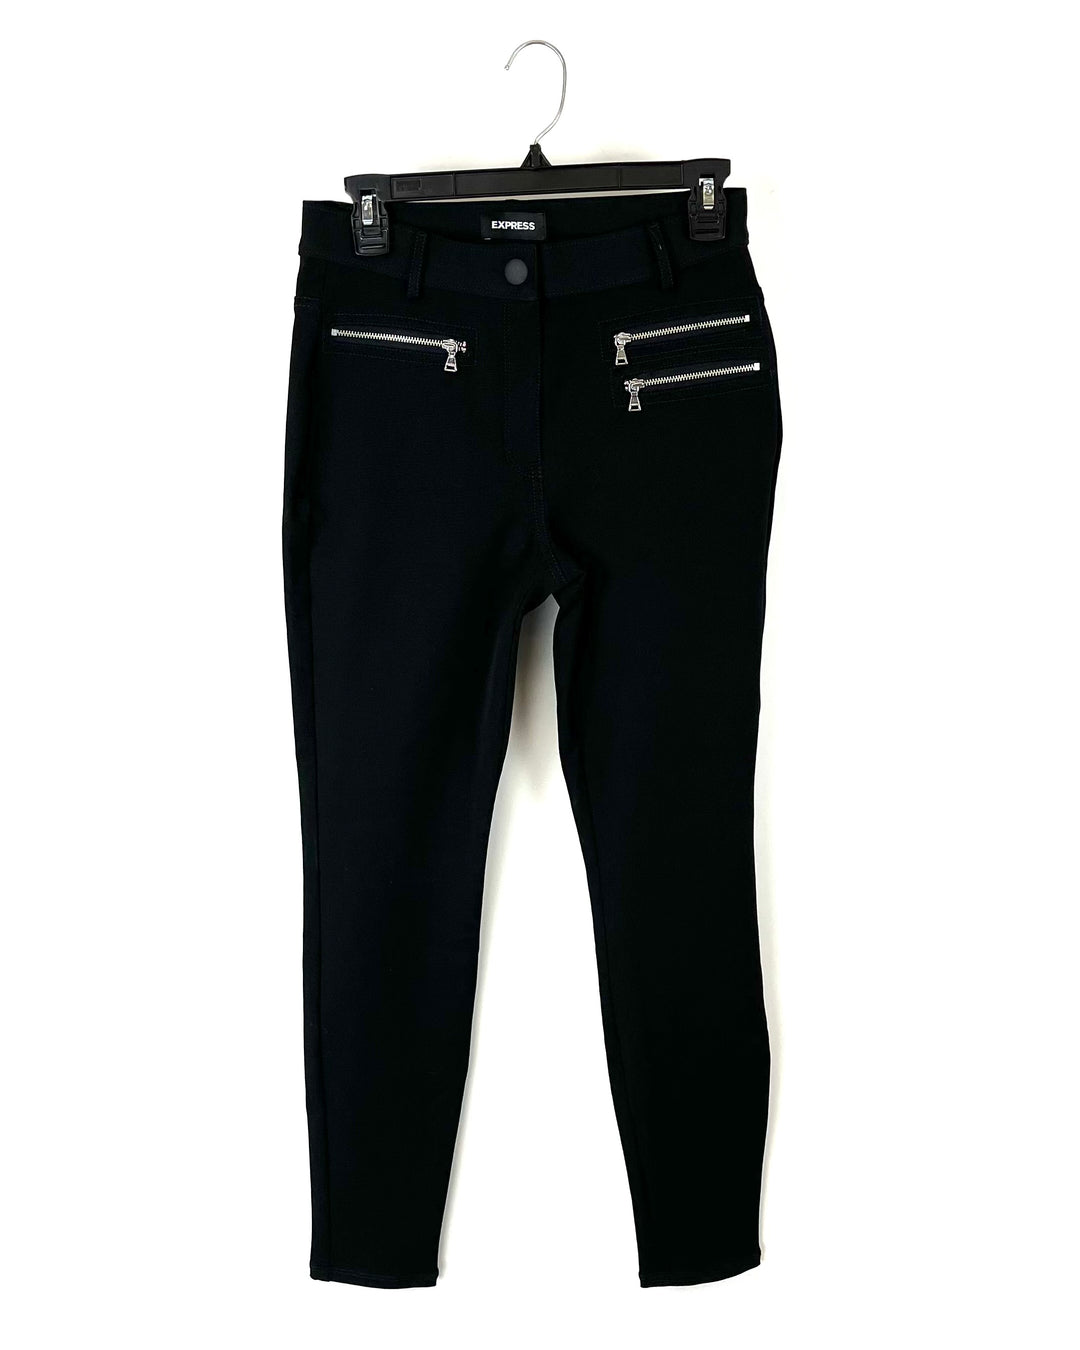 Black High Rise Pants - Size 4R